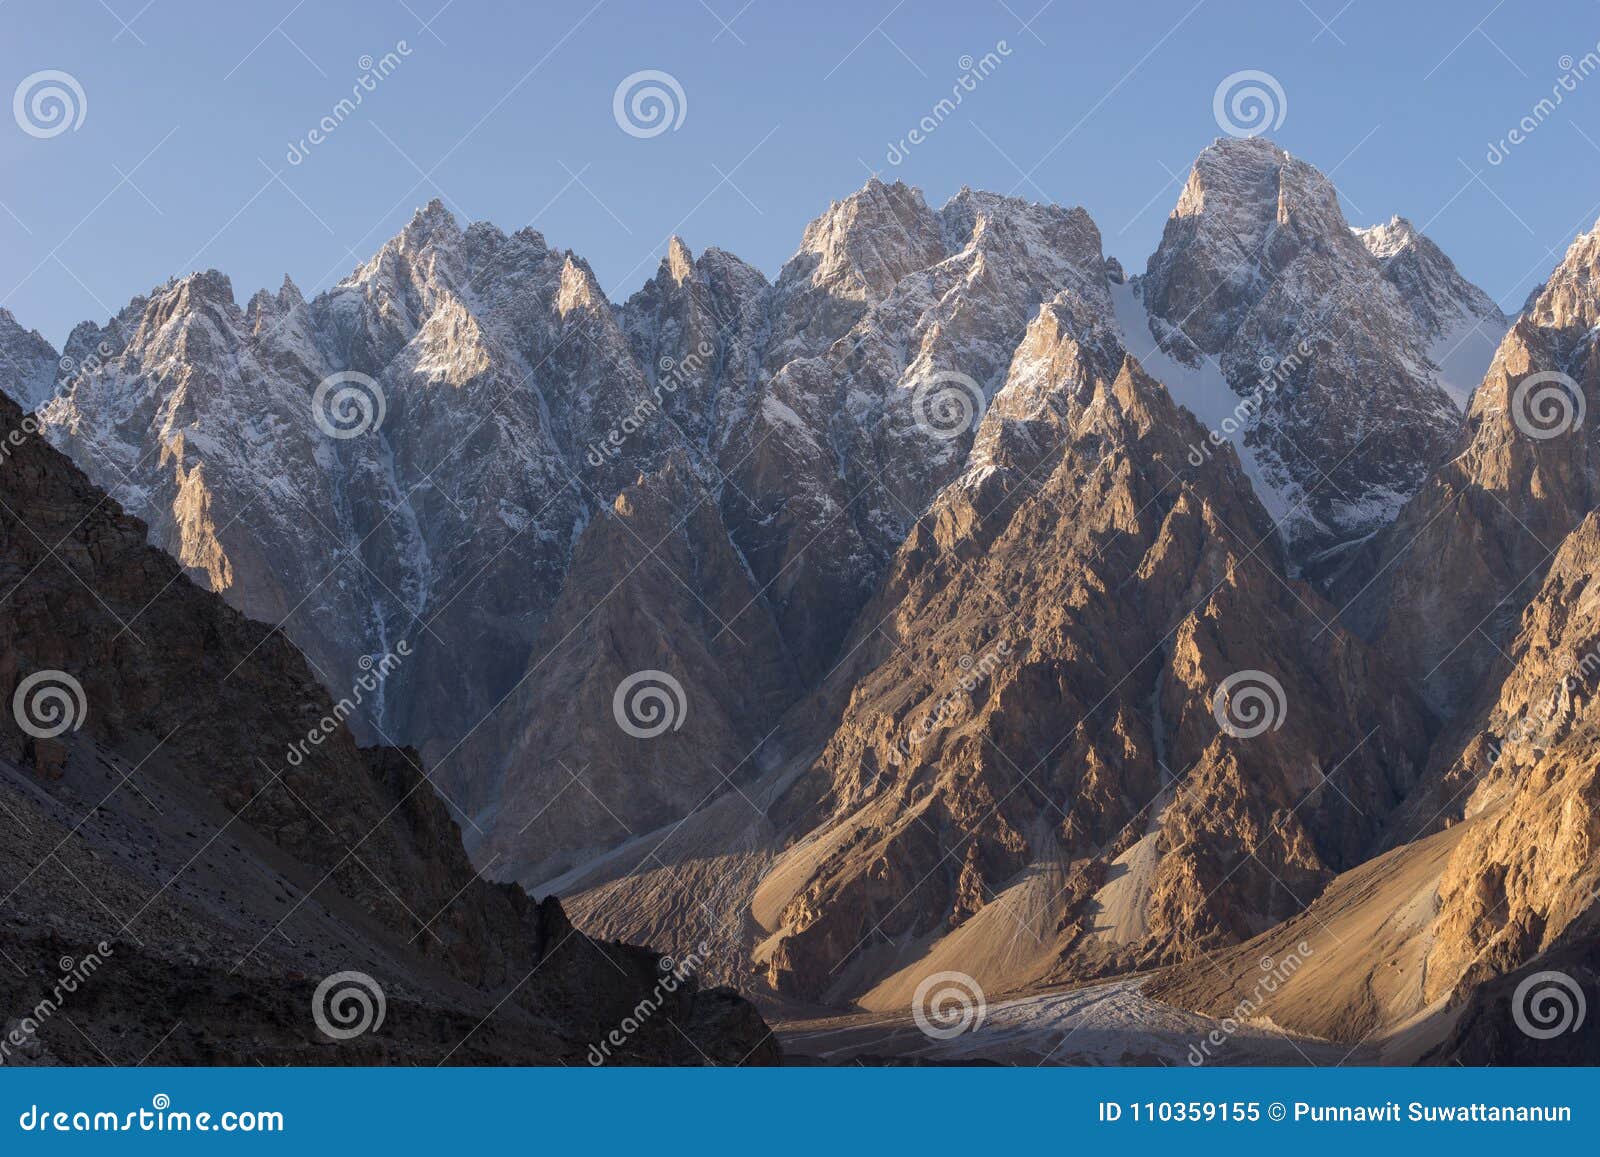 passu cathedral mountain peak in hunza valley, gilgit baltistan, pakistan